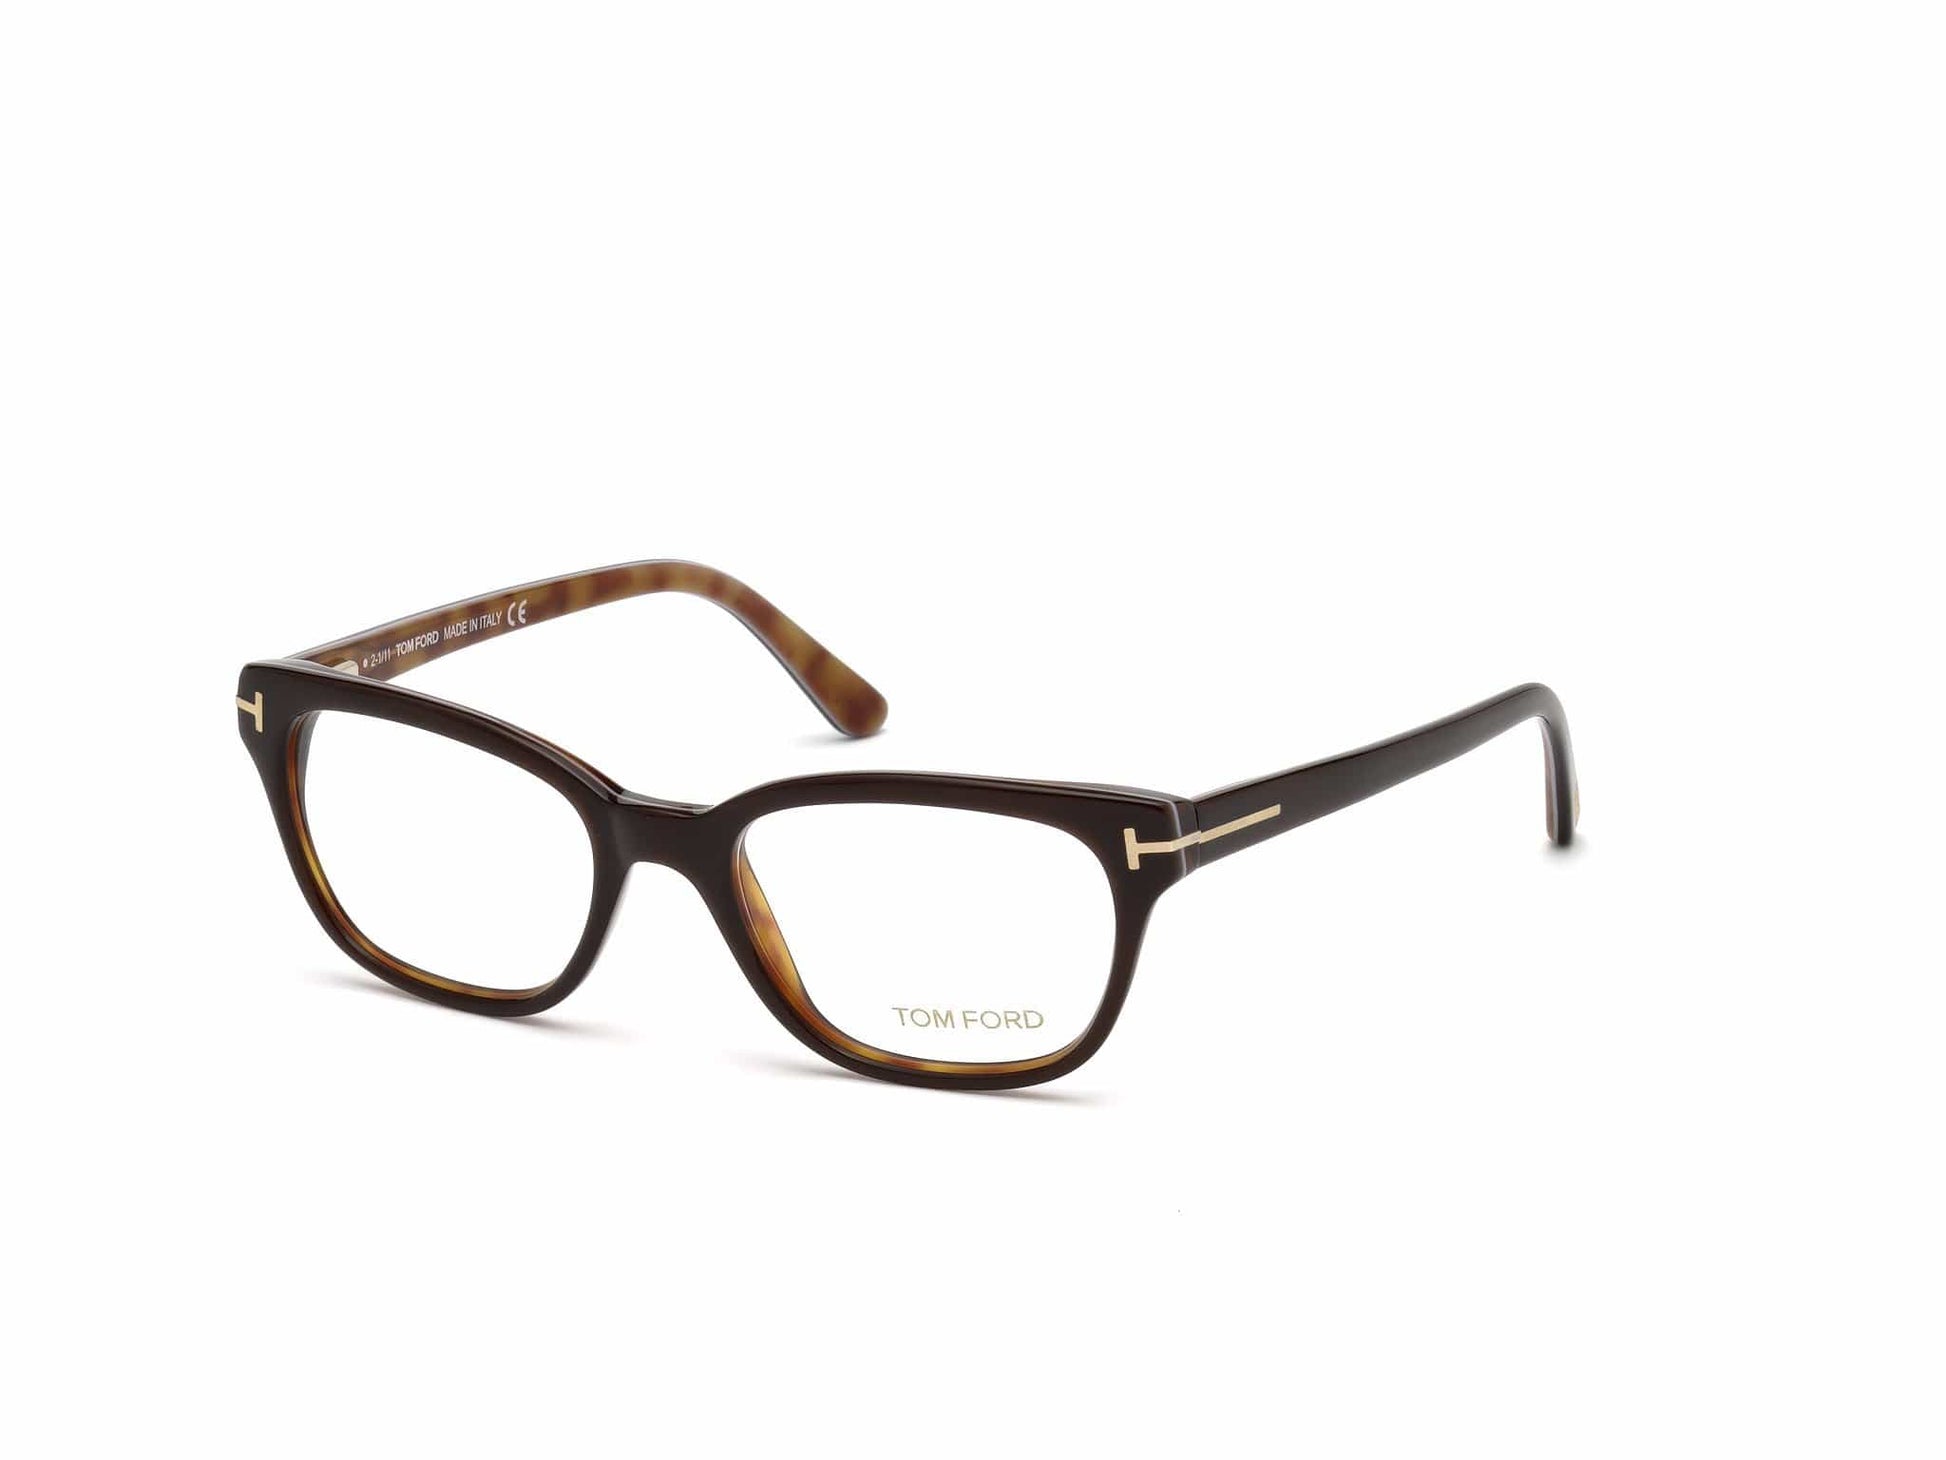 Tom Ford FT5207 Geometric Eyeglasses 047-047 - Shiny  Dark Brown, Shiny Blonde Havana